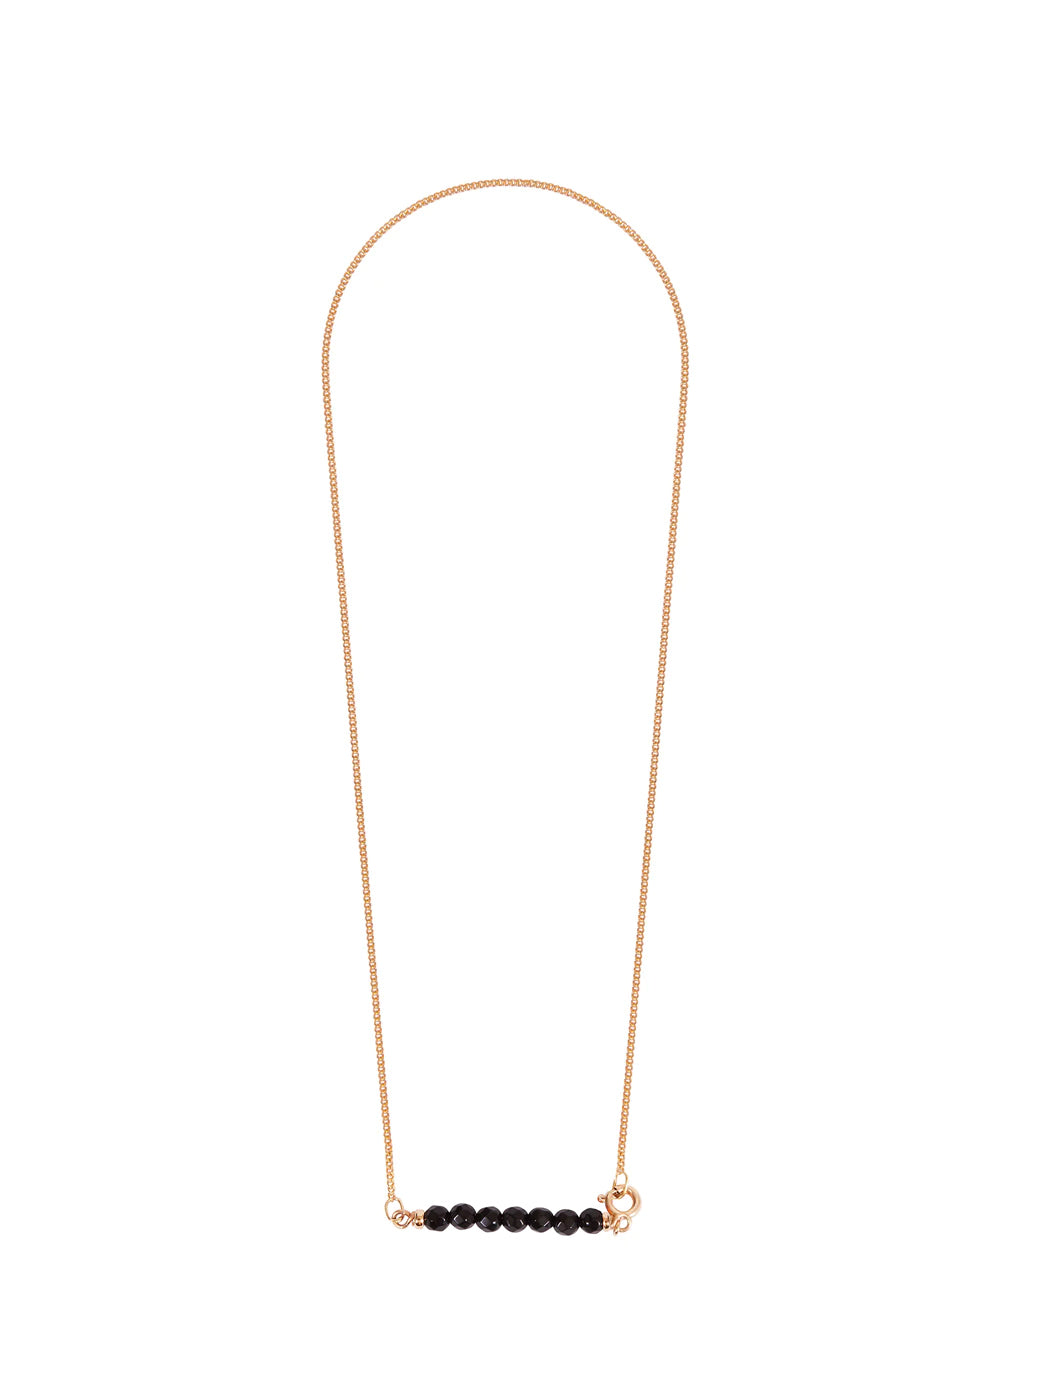 Fiorina Jewellery Gold Friendship Necklace Black Onyx